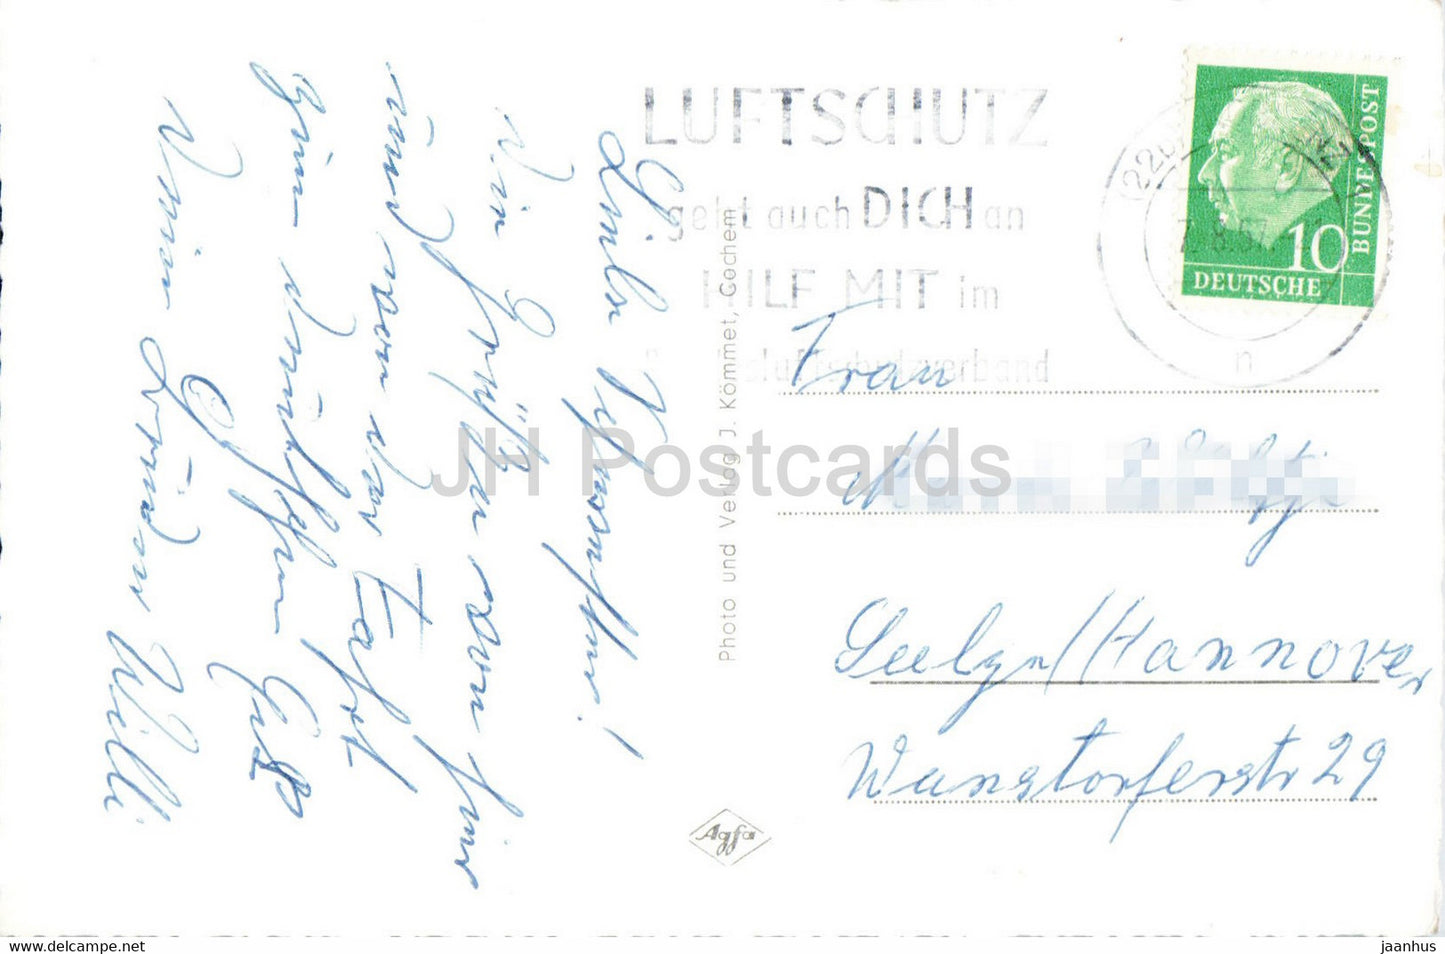 Cochem a d Mosel - bridge - old postcard - 1957 - Germany - used